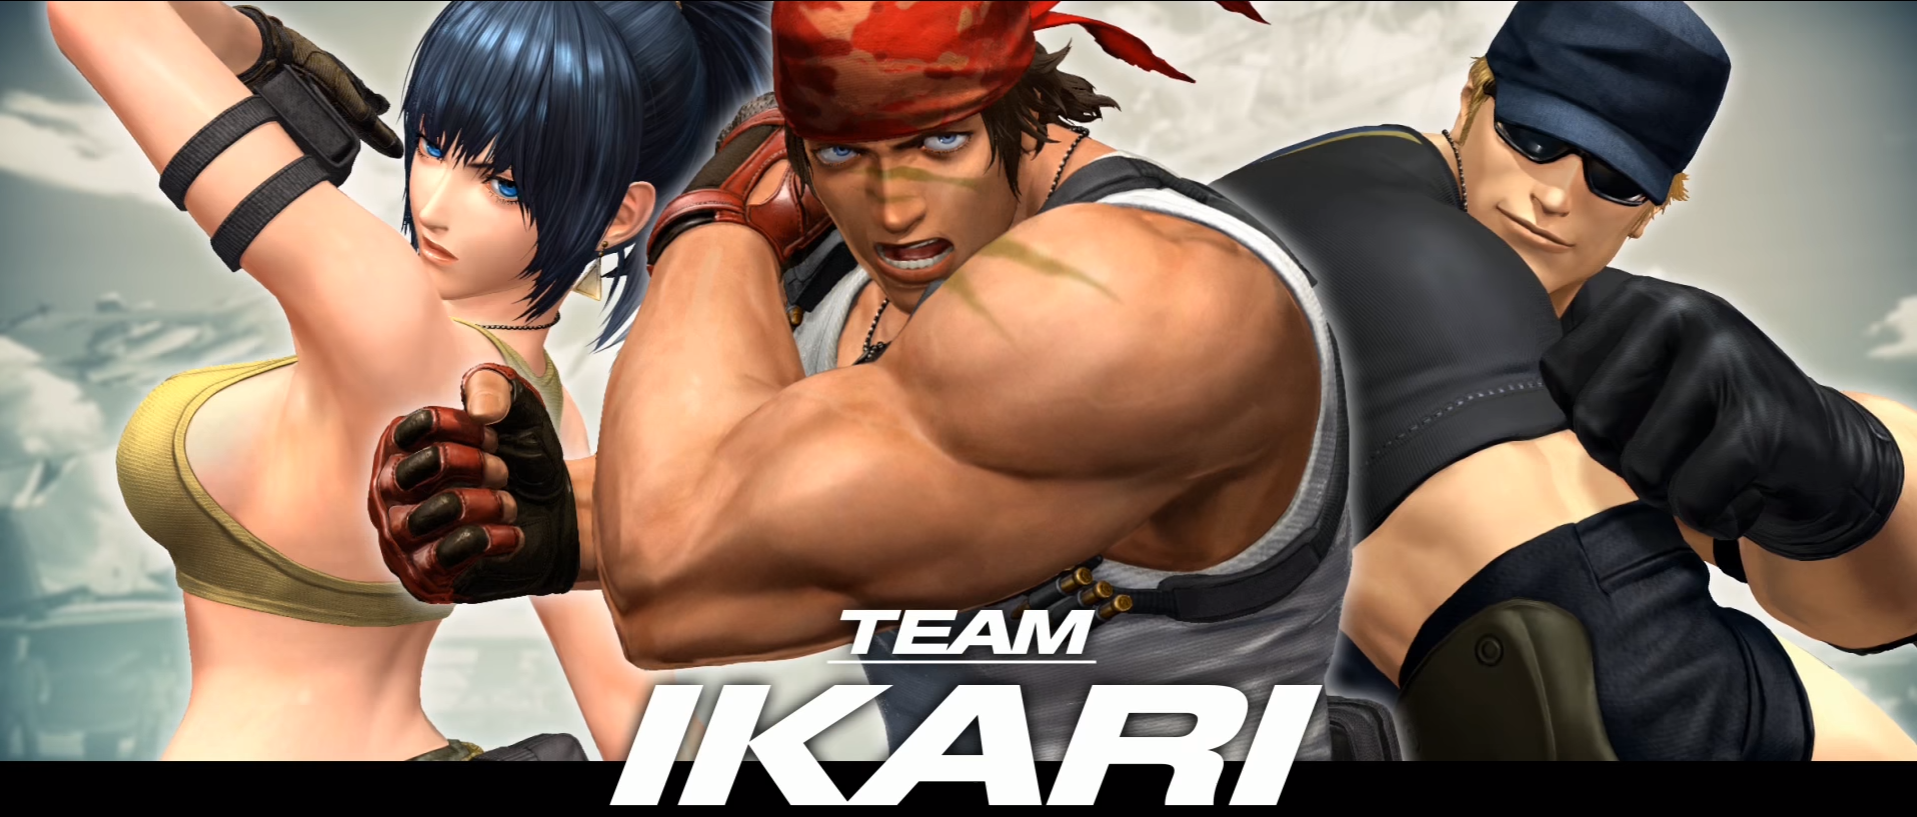 SNK presenta al equipo “Ikari” en The King of Fighters XIV